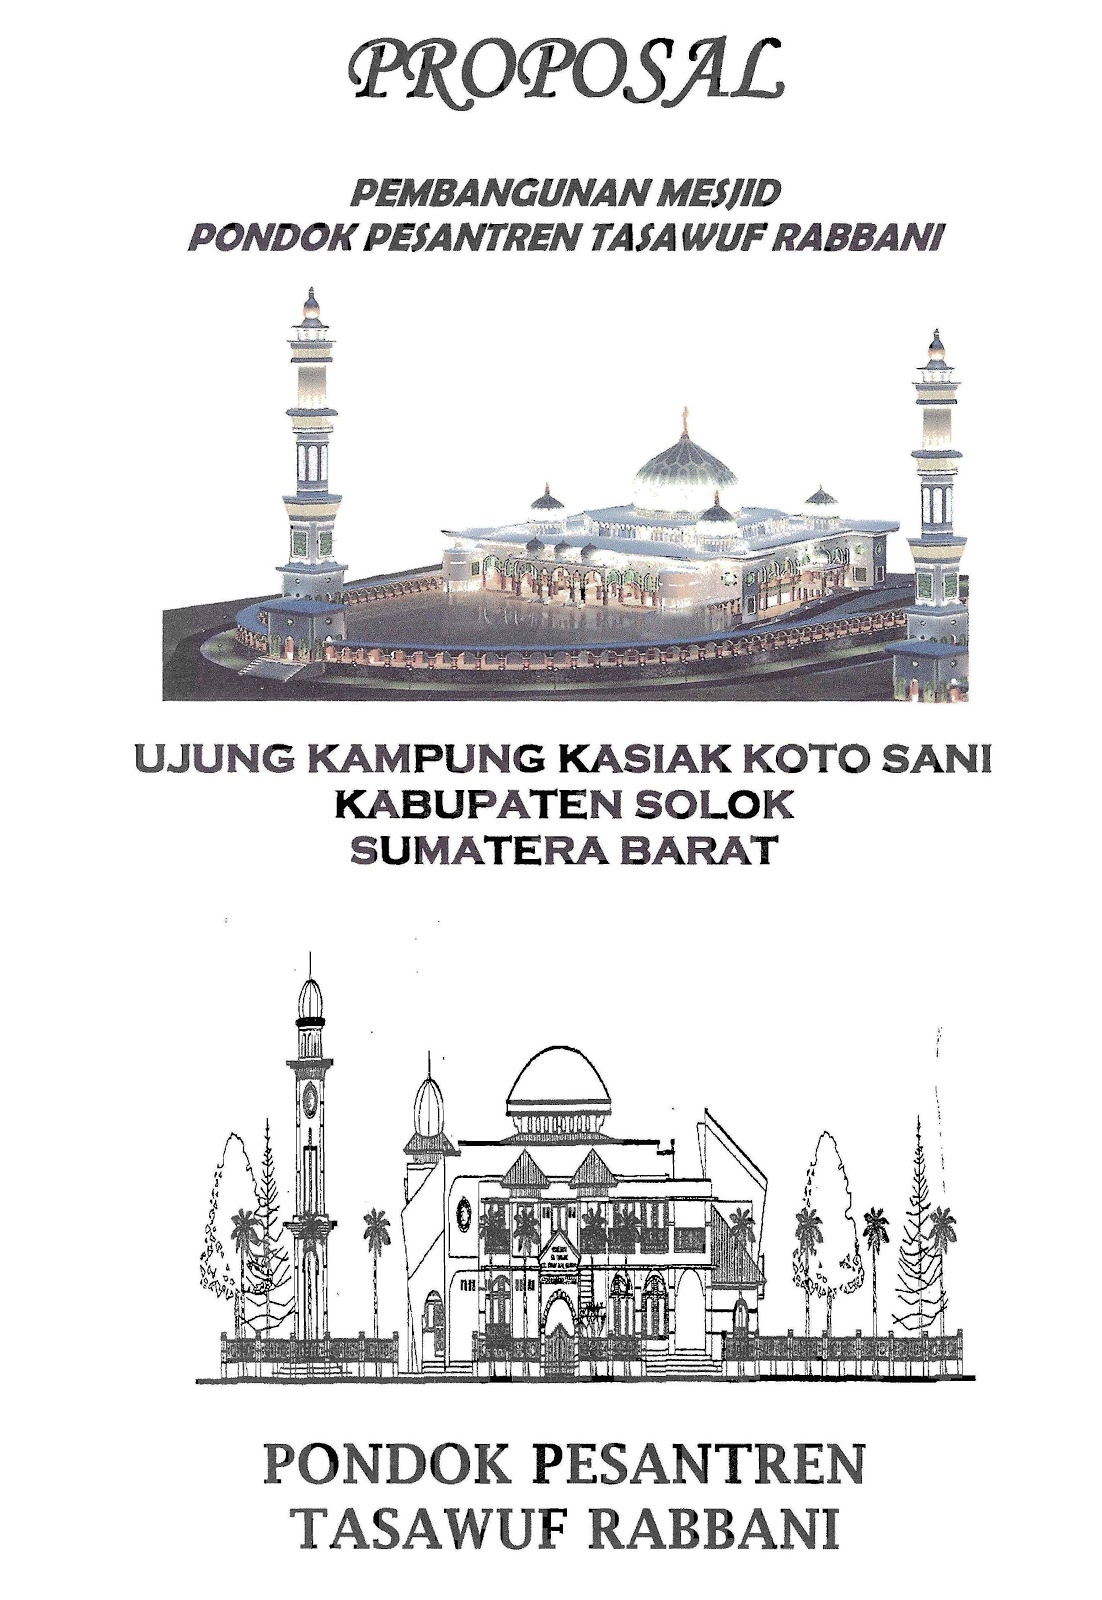 Majelis Rabbani: Proposal Pembangunan Masjid Ponpes 